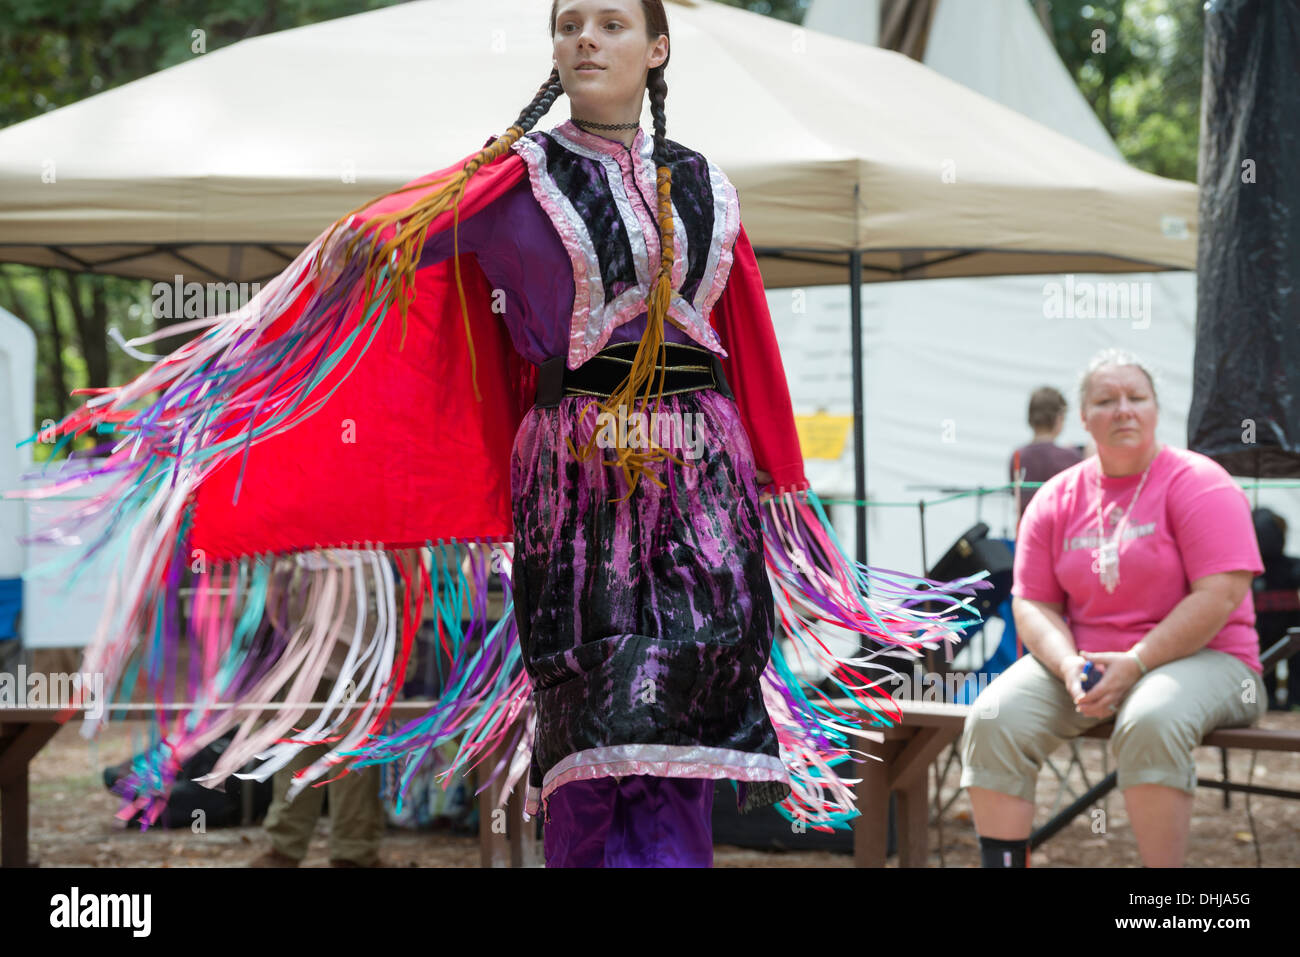 Native American Festival at Oleno State Park in North Florida Stock